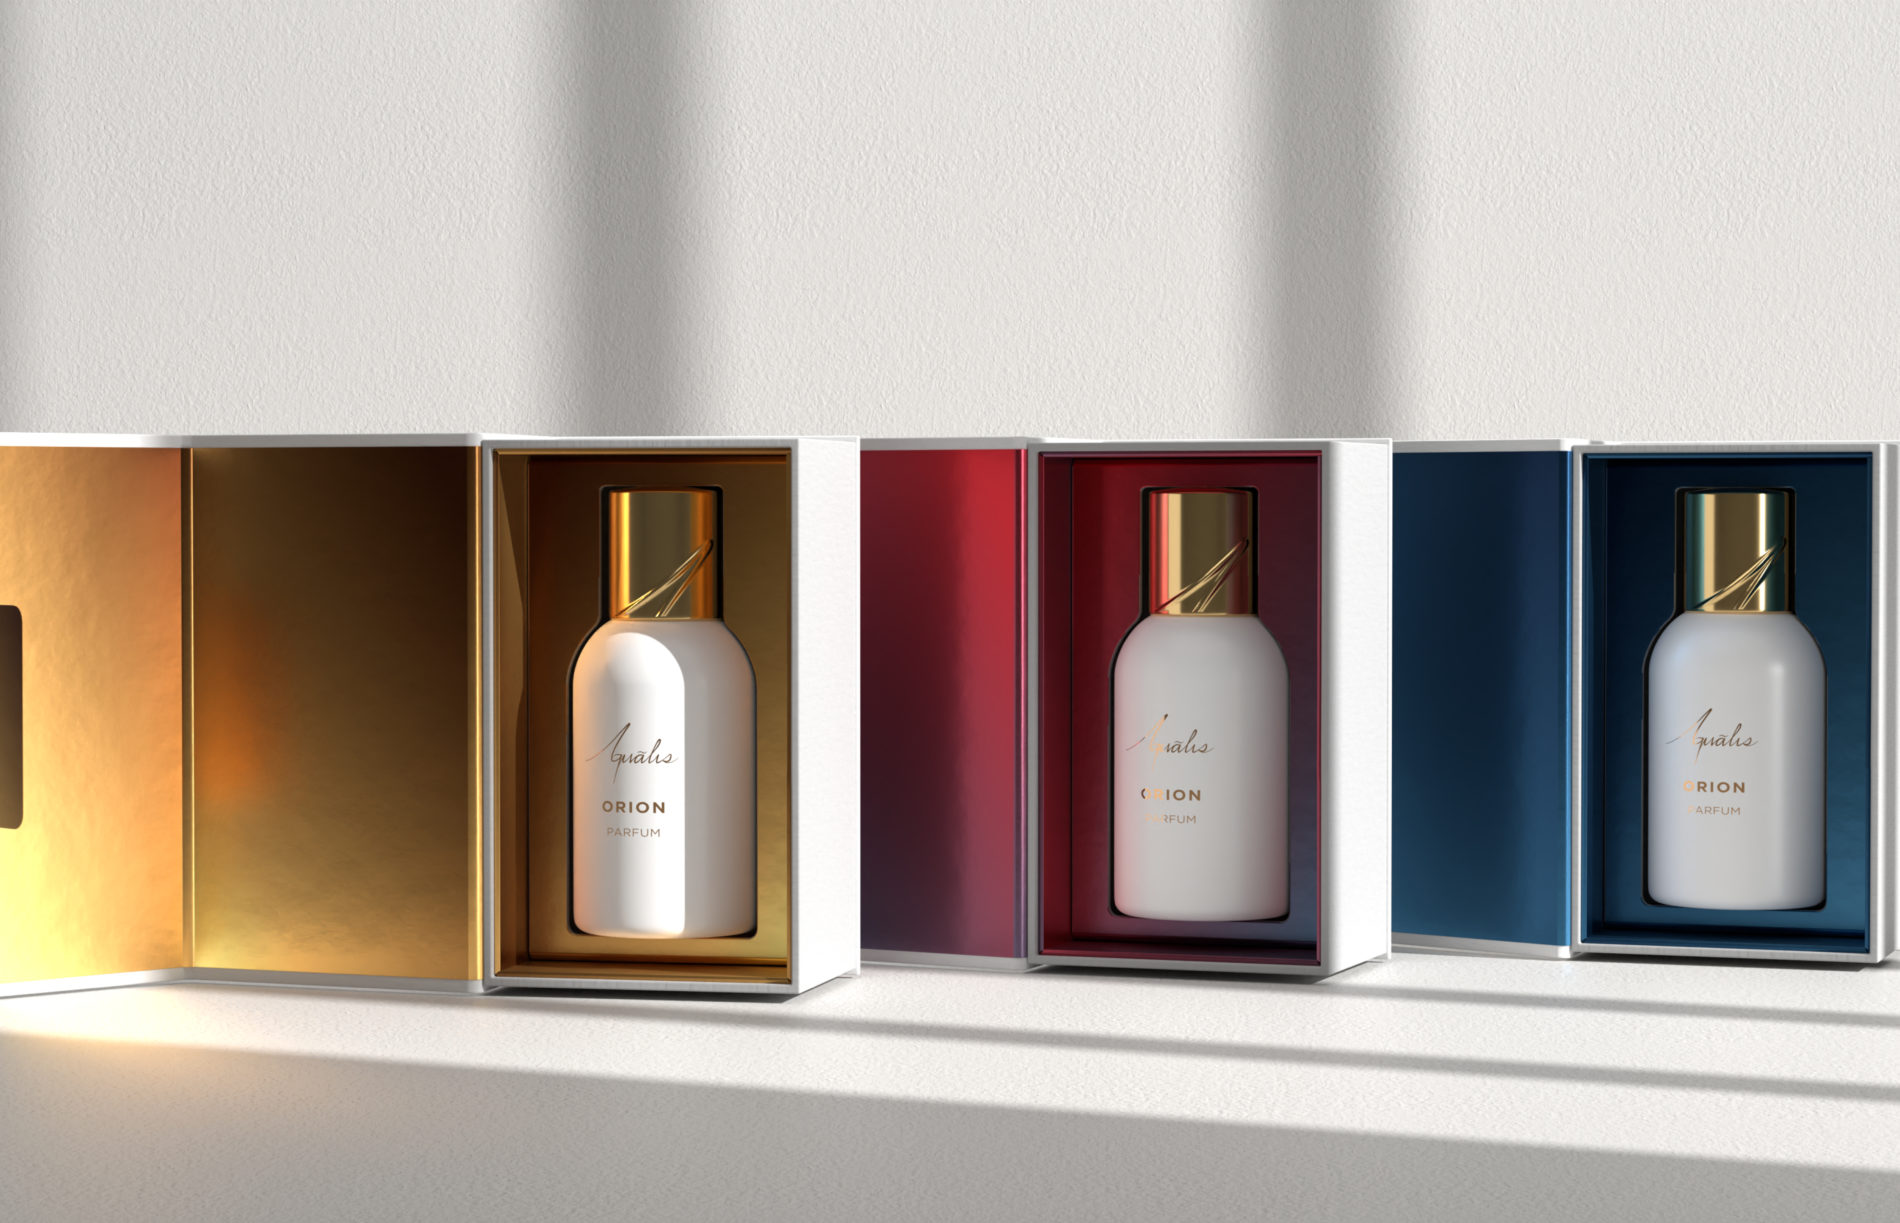 The Aquilis Rion Parfum packs